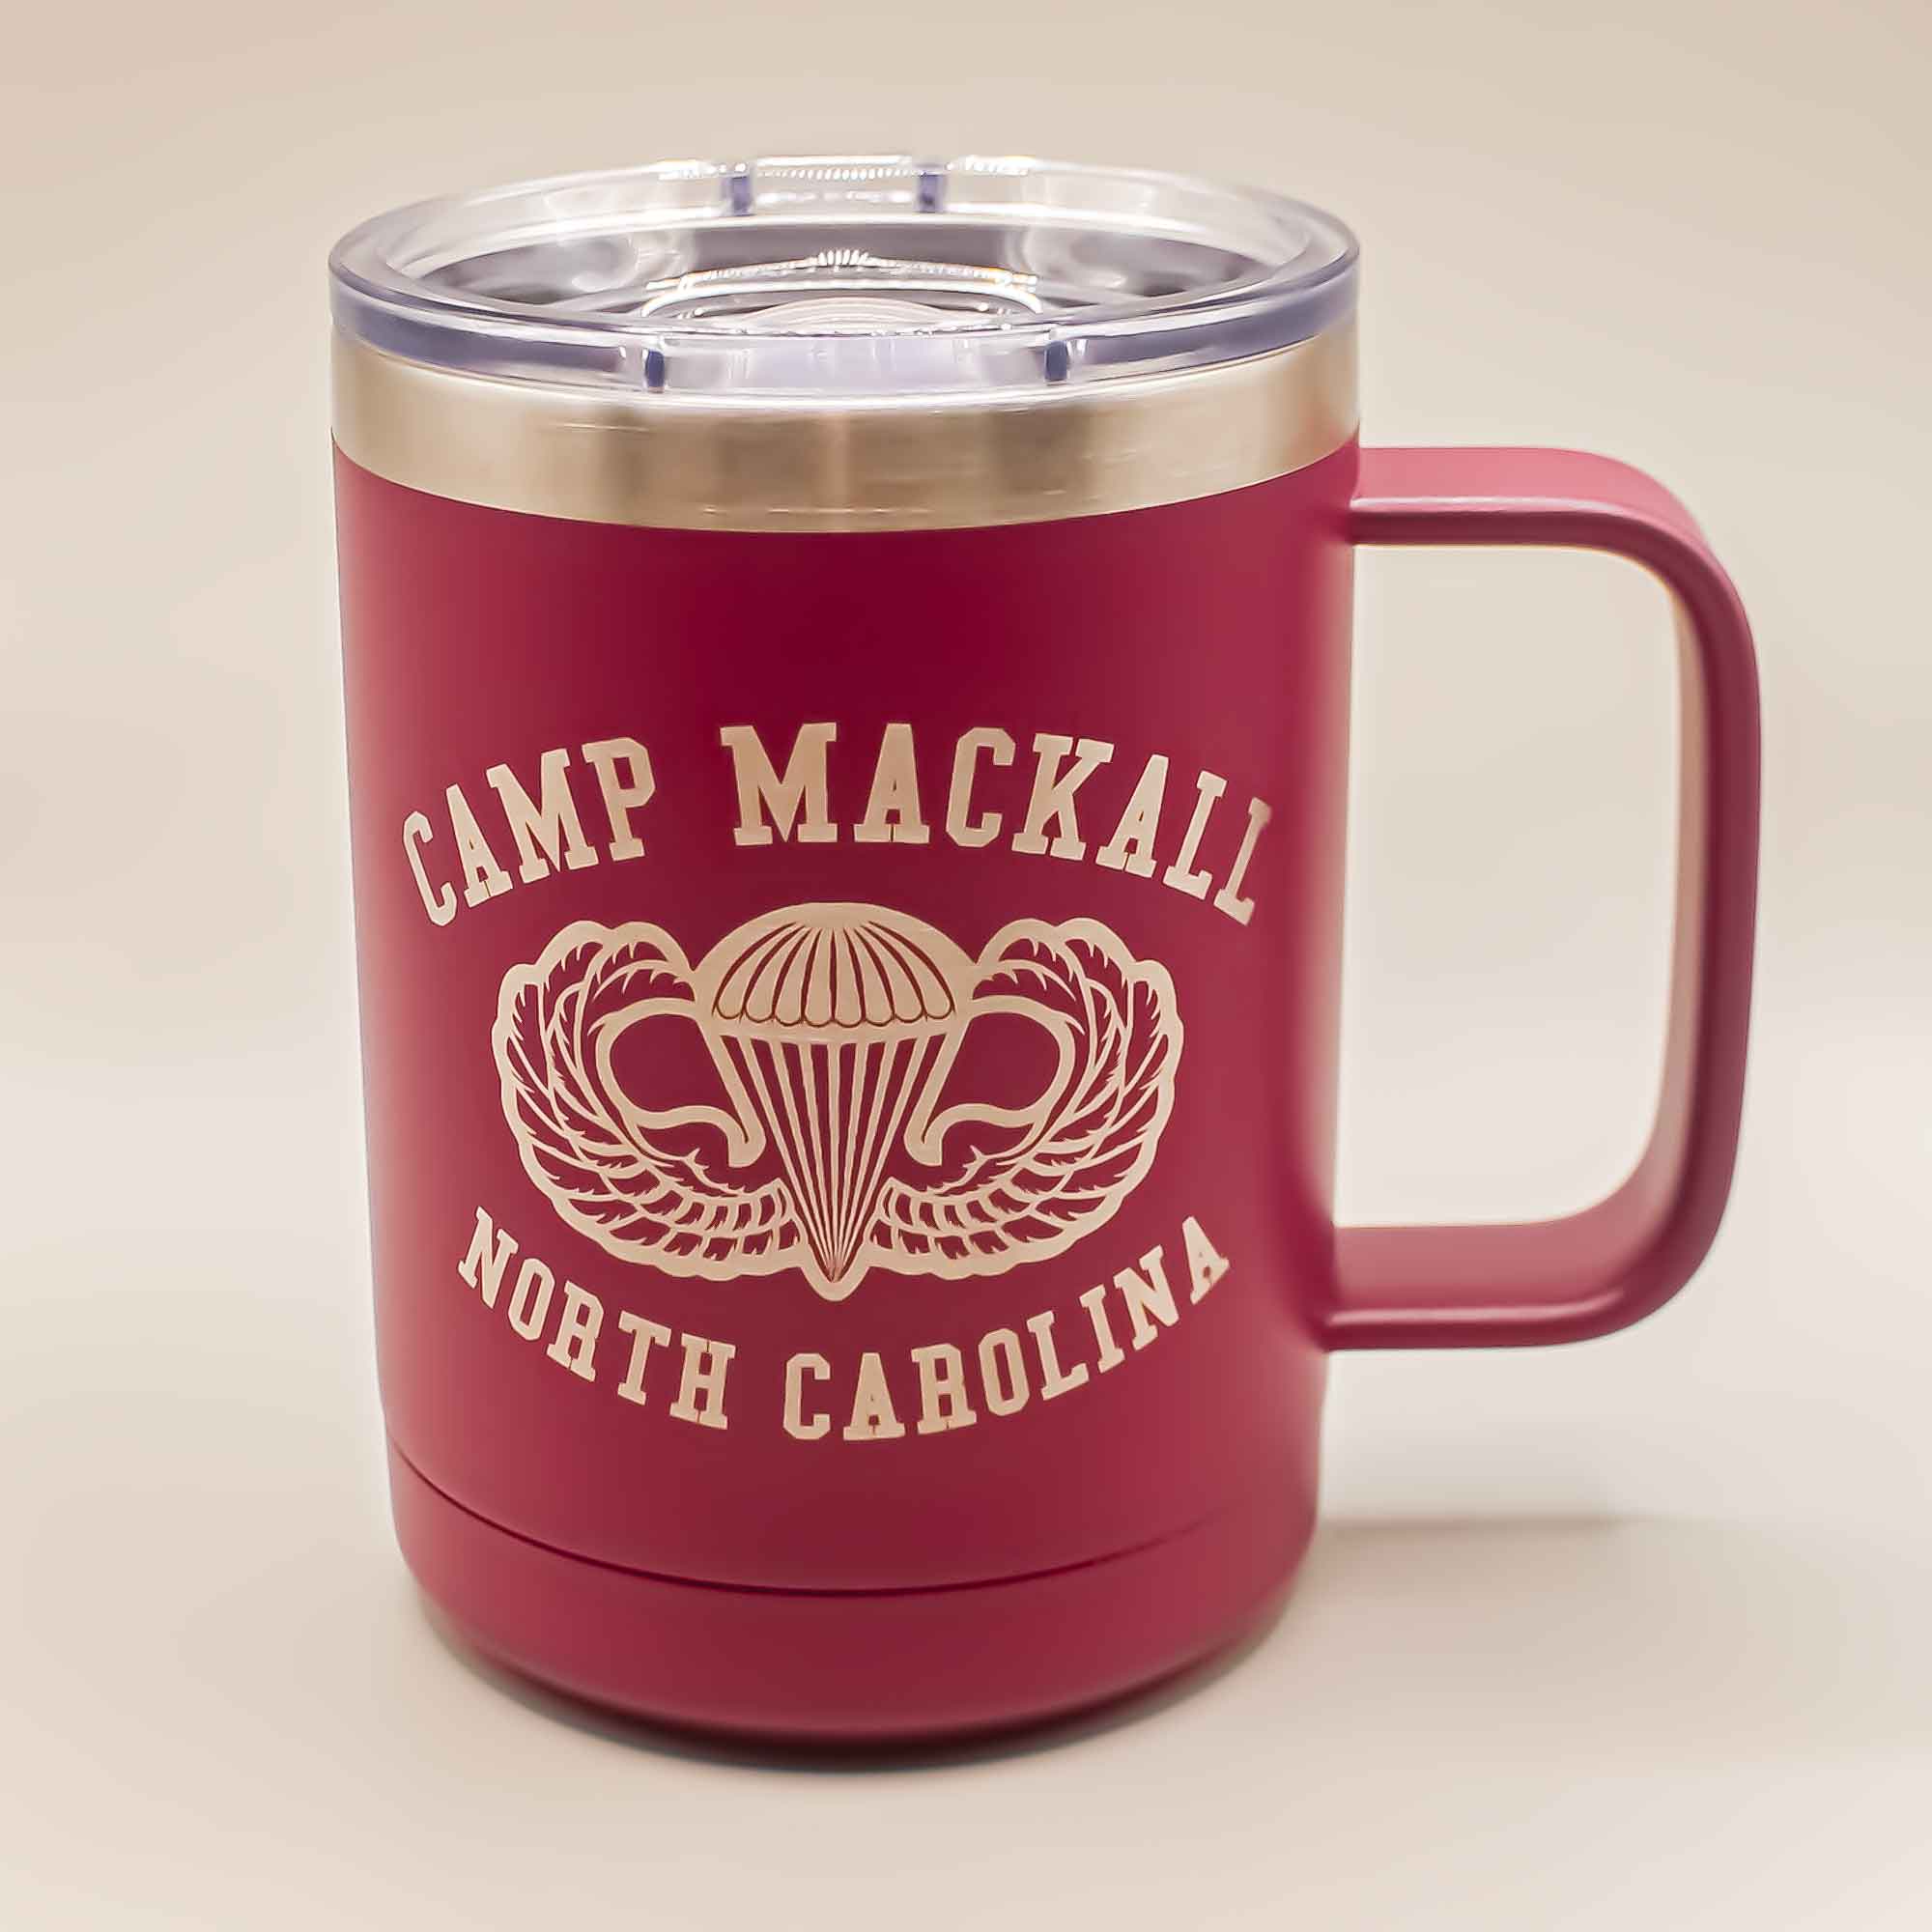 Camp MacKall Mug